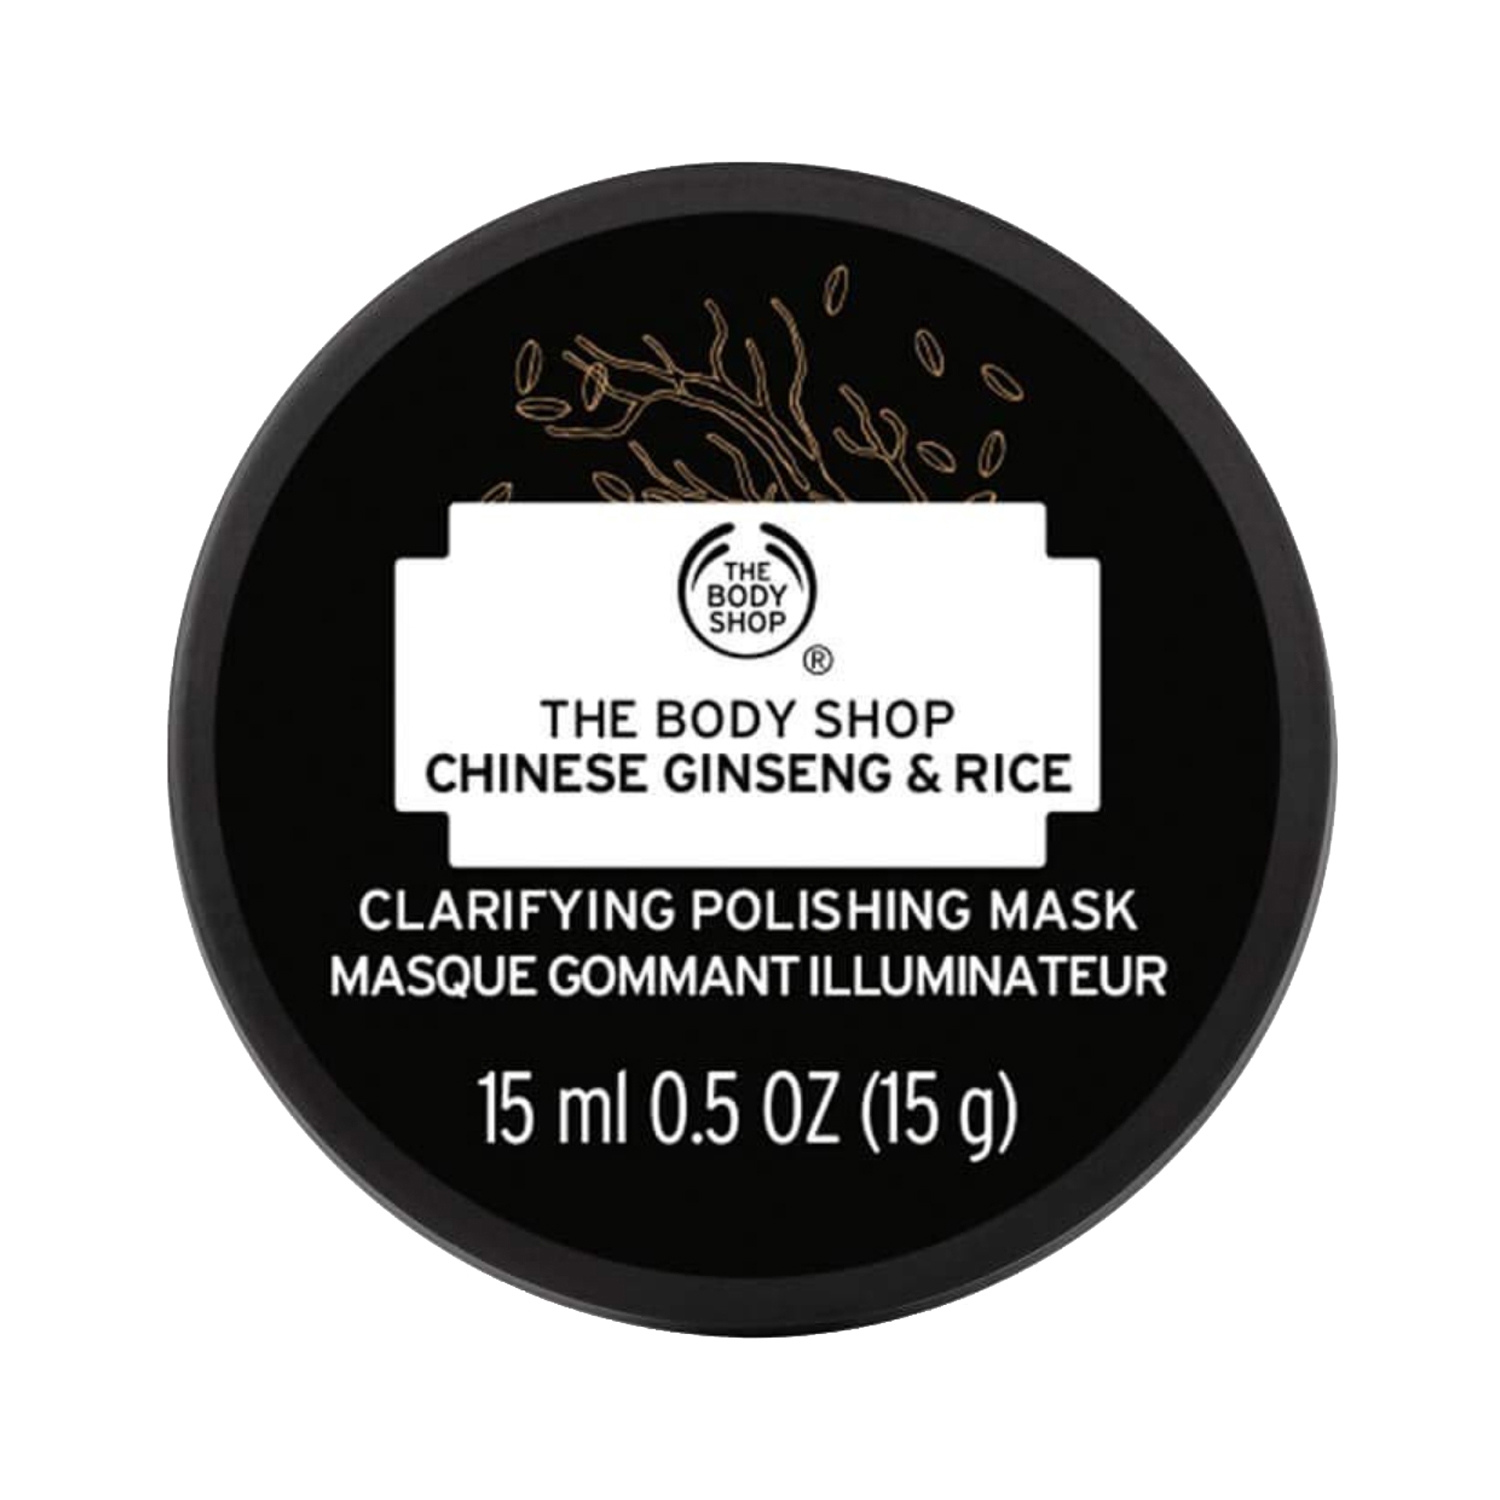 The Body Shop | The Body Shop Chinese Ginseng & Rice Clarifying Polishing Mask (15ml)